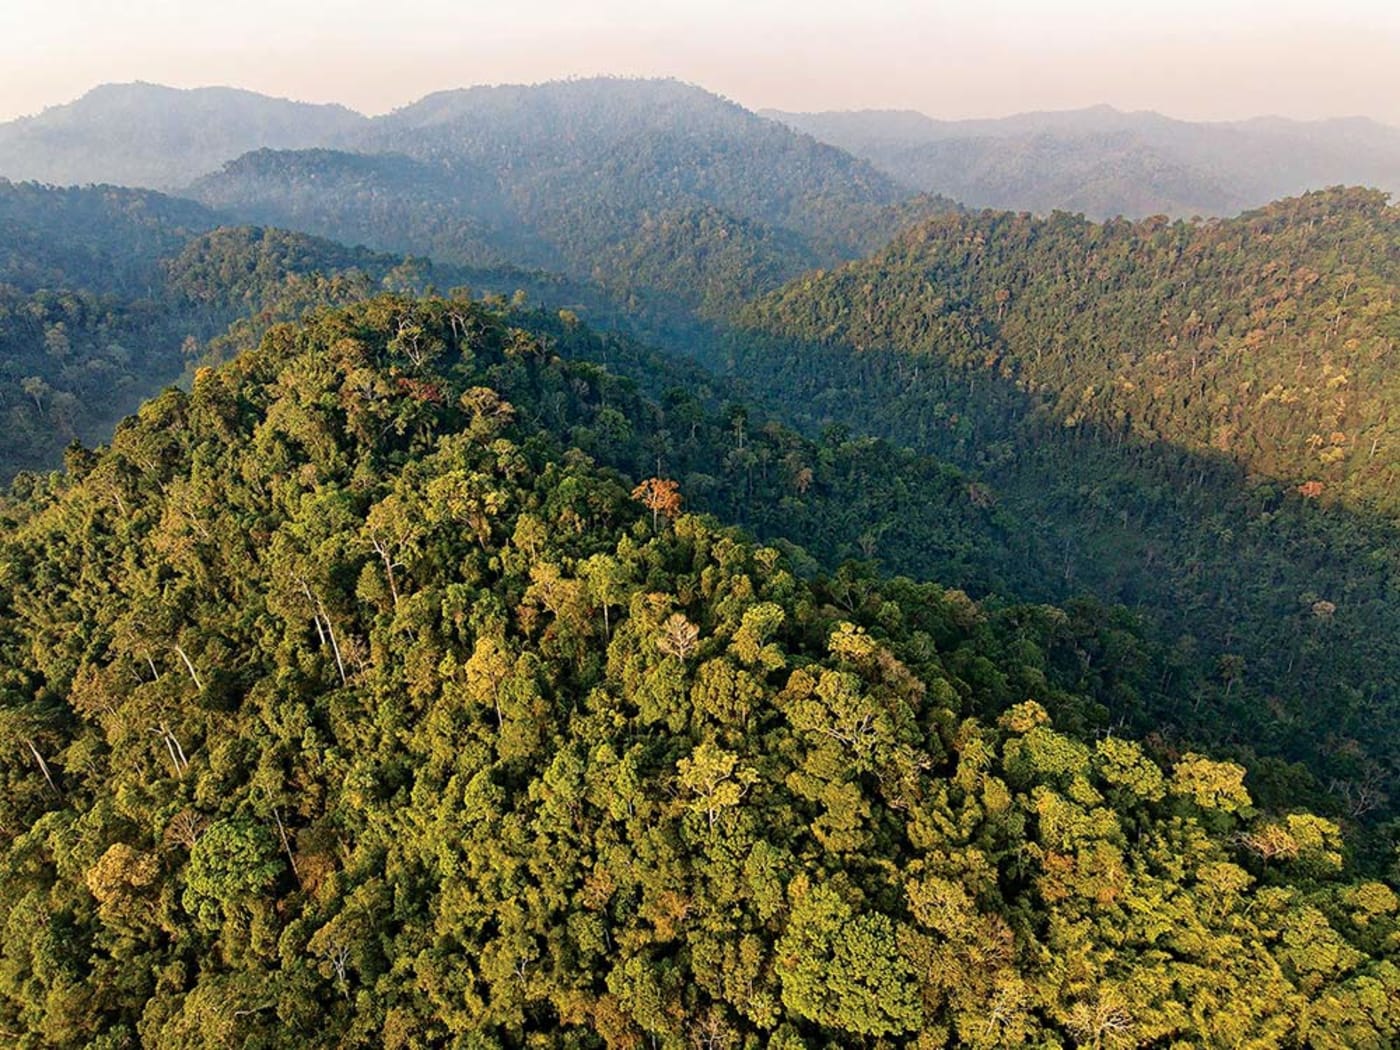 Aerial view of the Tenasserim Hills in the Tanintharyi region of Myanmar